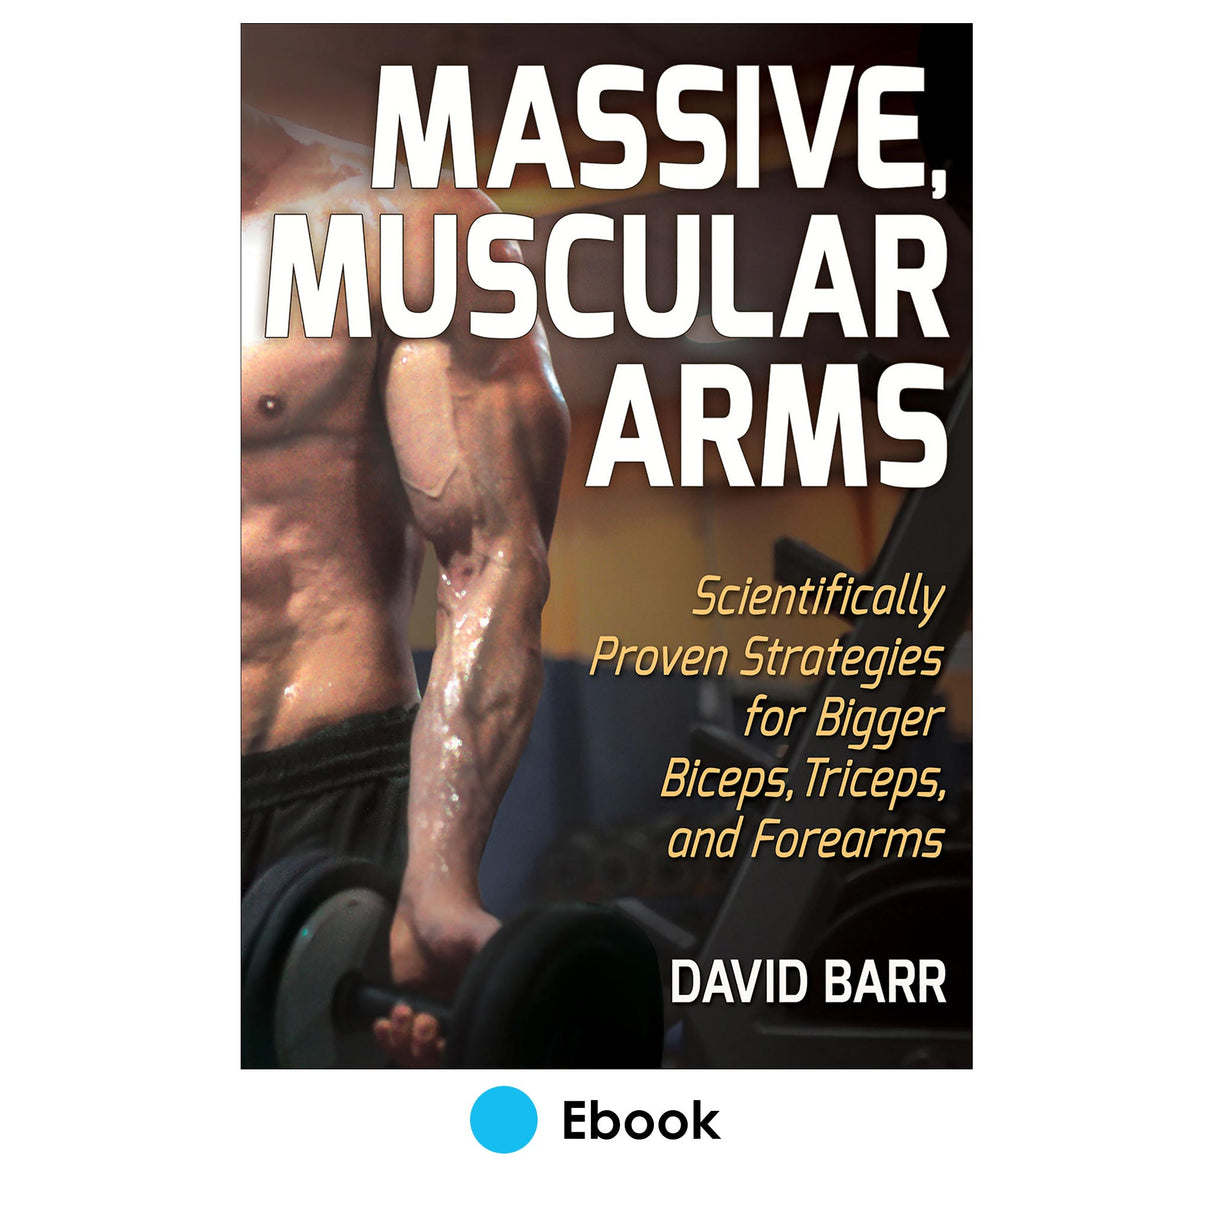 Massive, Muscular Arms epub